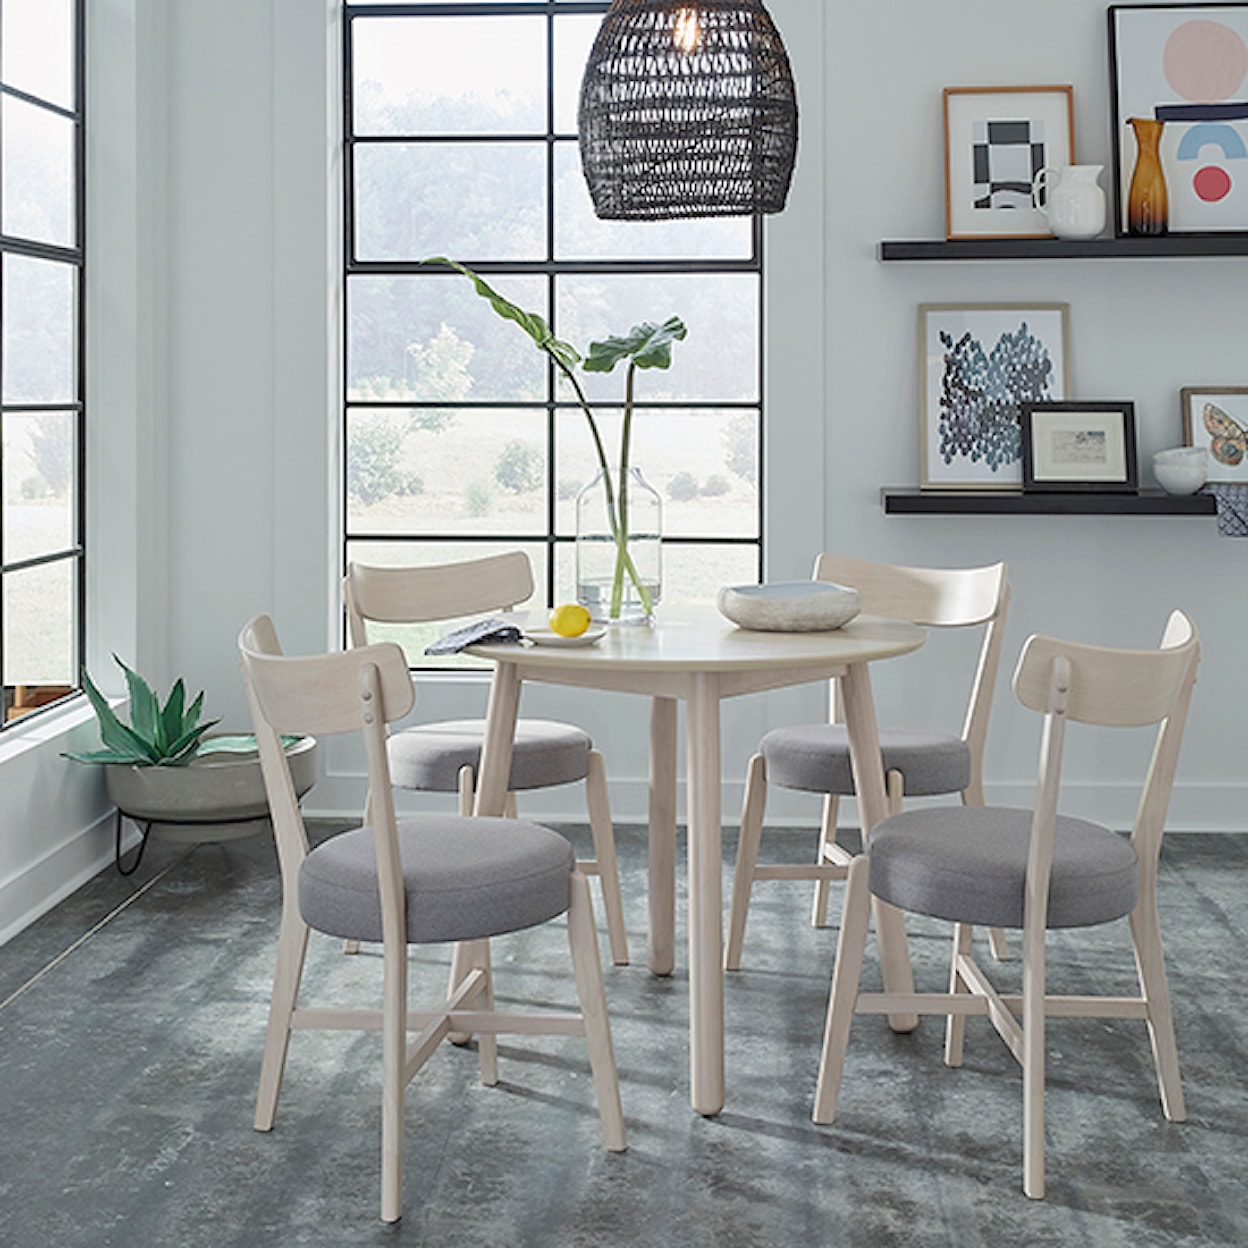 Progressive Furniture Hopper Dining Chair